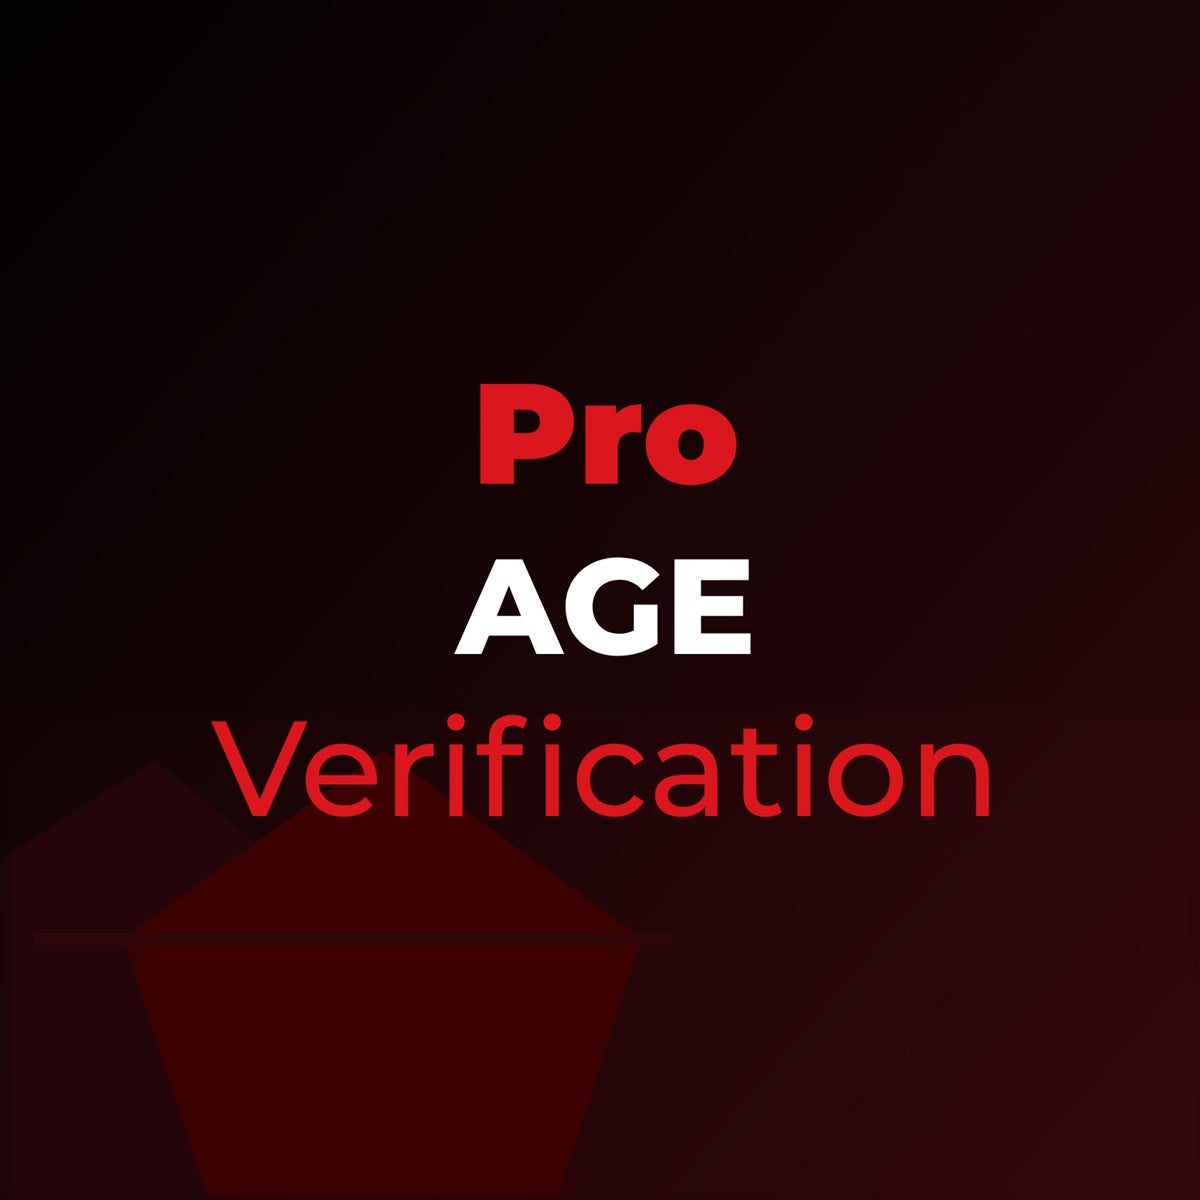 Pro Age Verification for Shopify